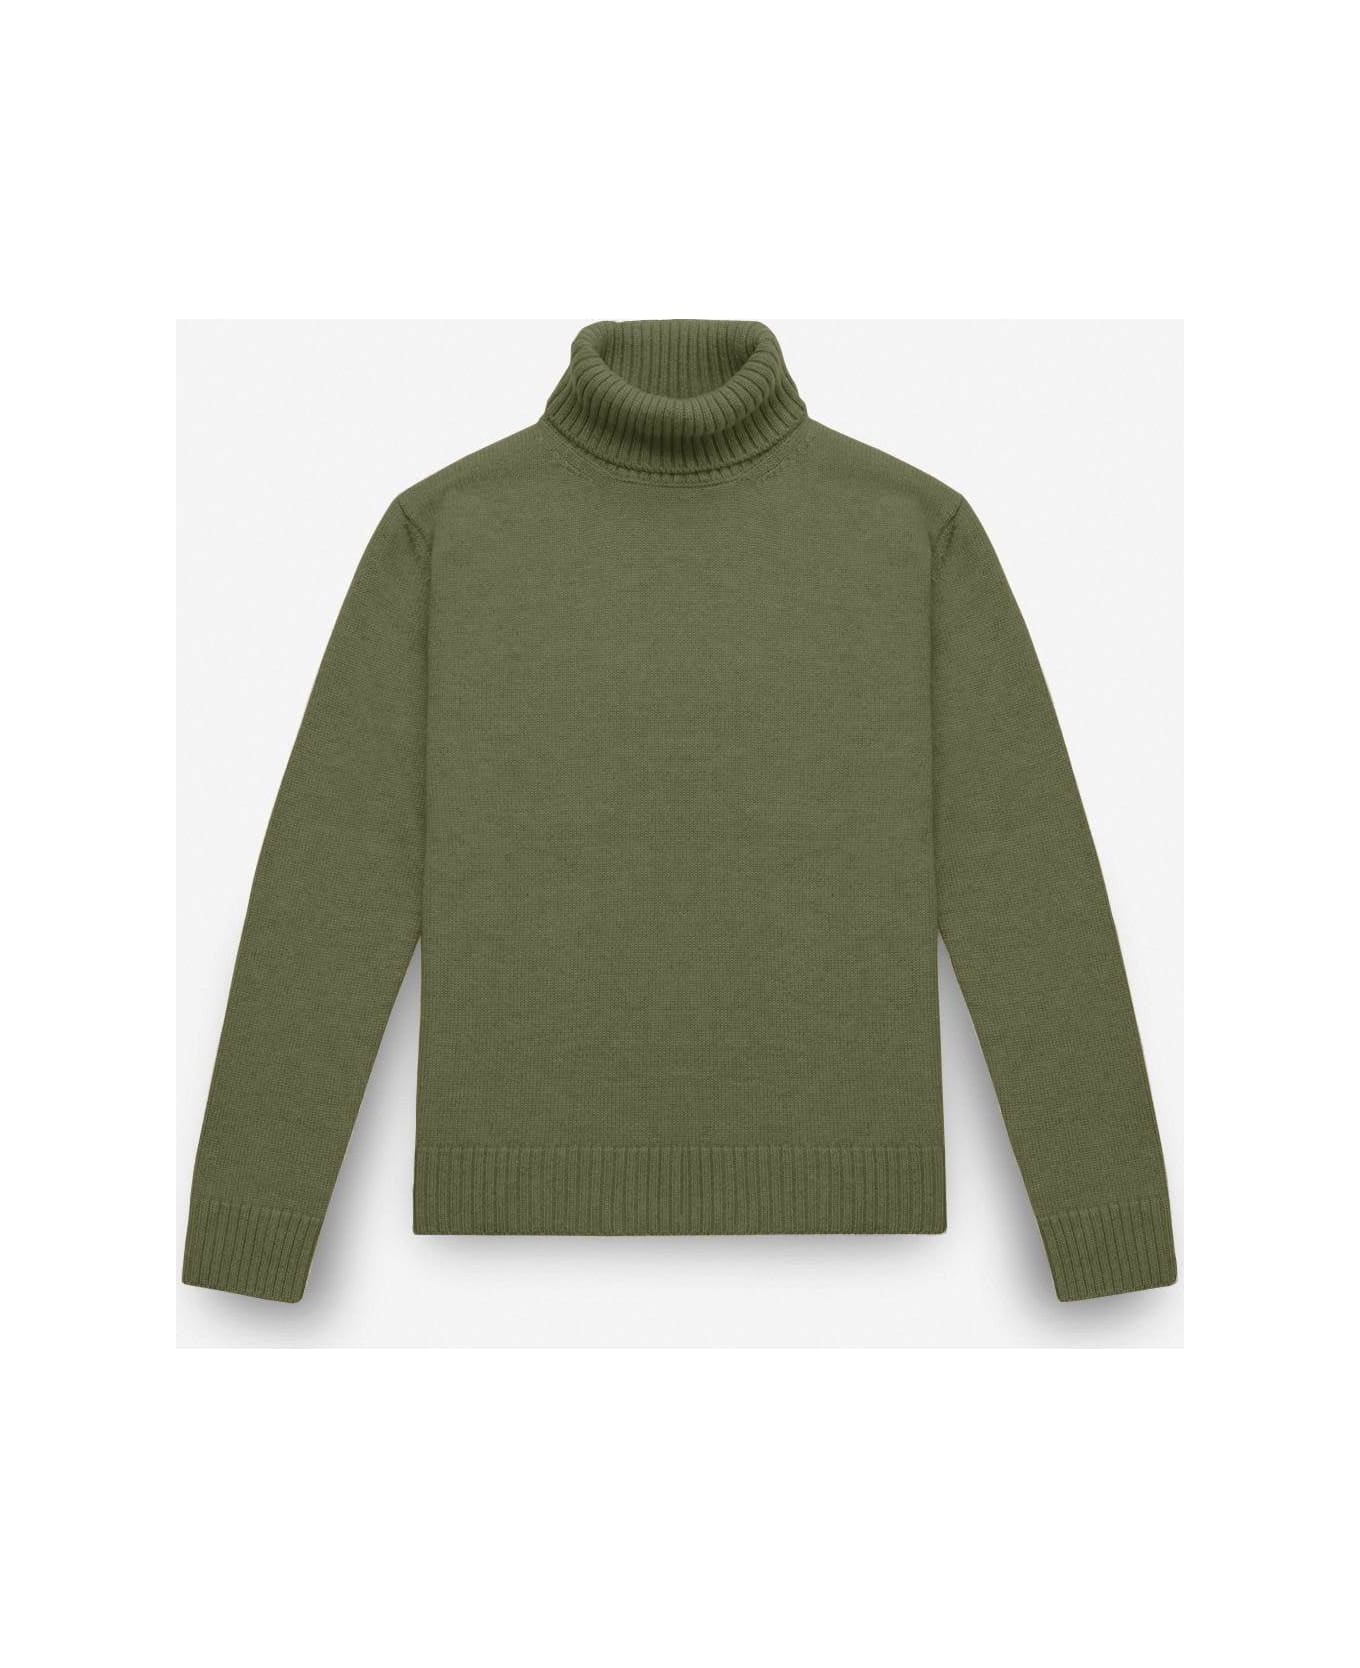 Larusmiani Turtleneck Sweater 'diablerets' Sweater - Olive